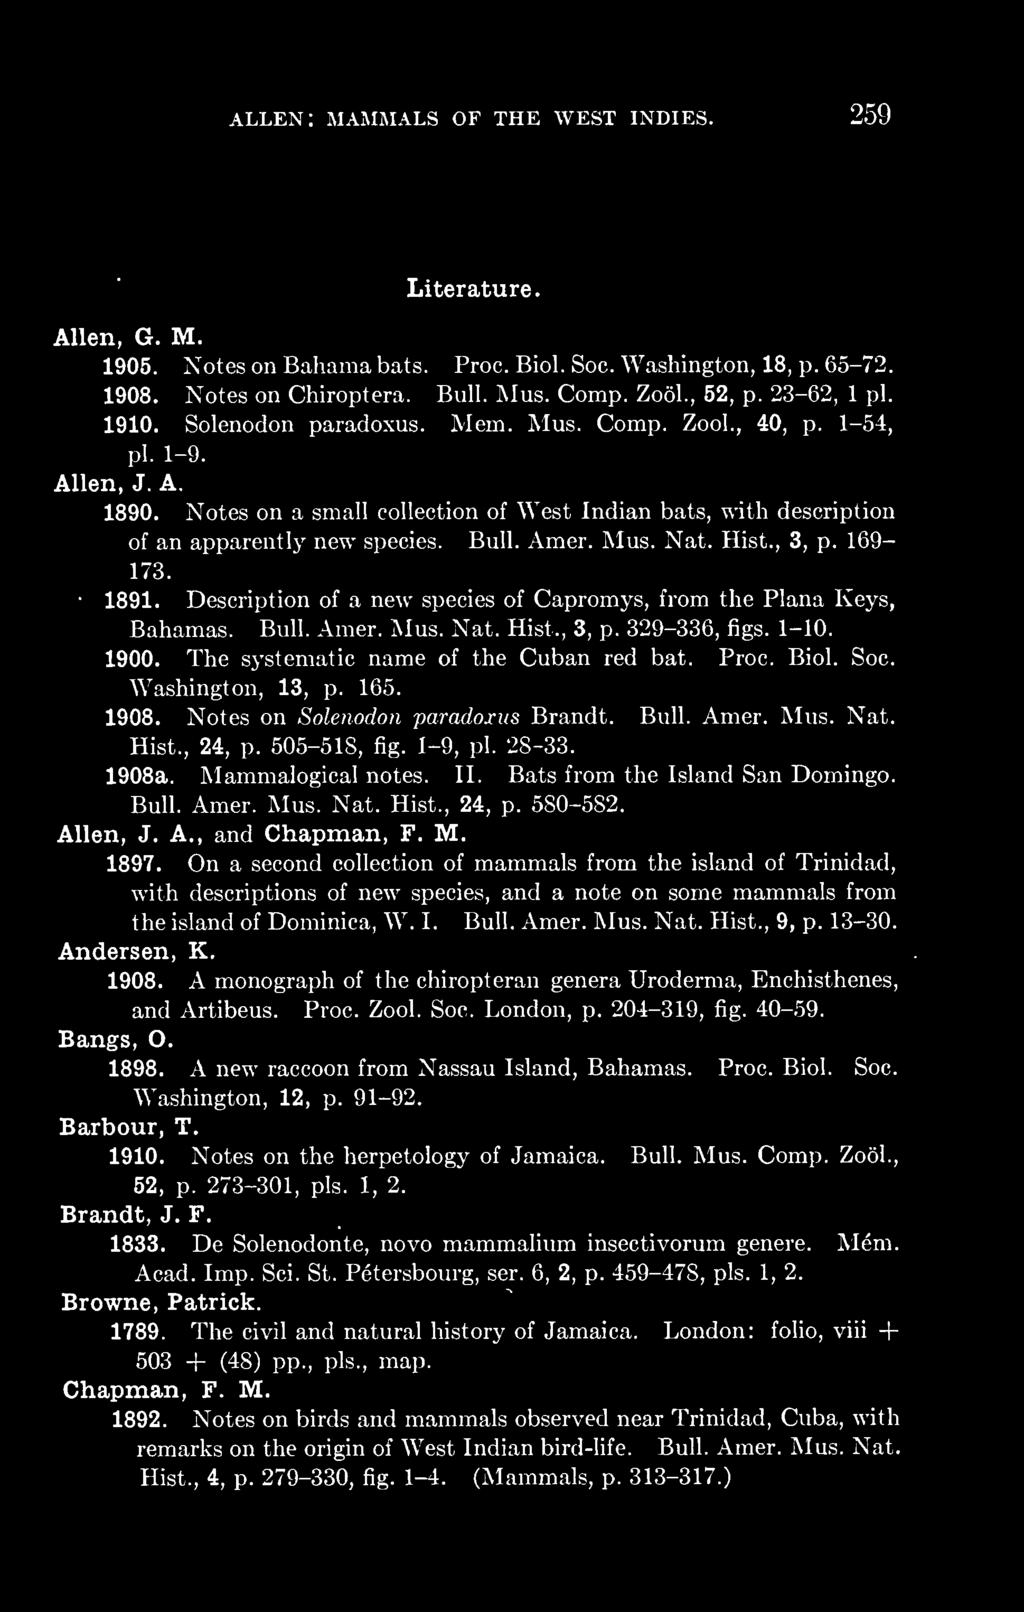 Bull. Amer. Mus. Nat. Hist., 3, p. 169-173. 1891. Description of a new species of Capromys, from the Plana Keys, Bahamas. Bull. Amer. Mus. Nat. Hist,, 3, p. 329-336, figs. 1-10. 1900.